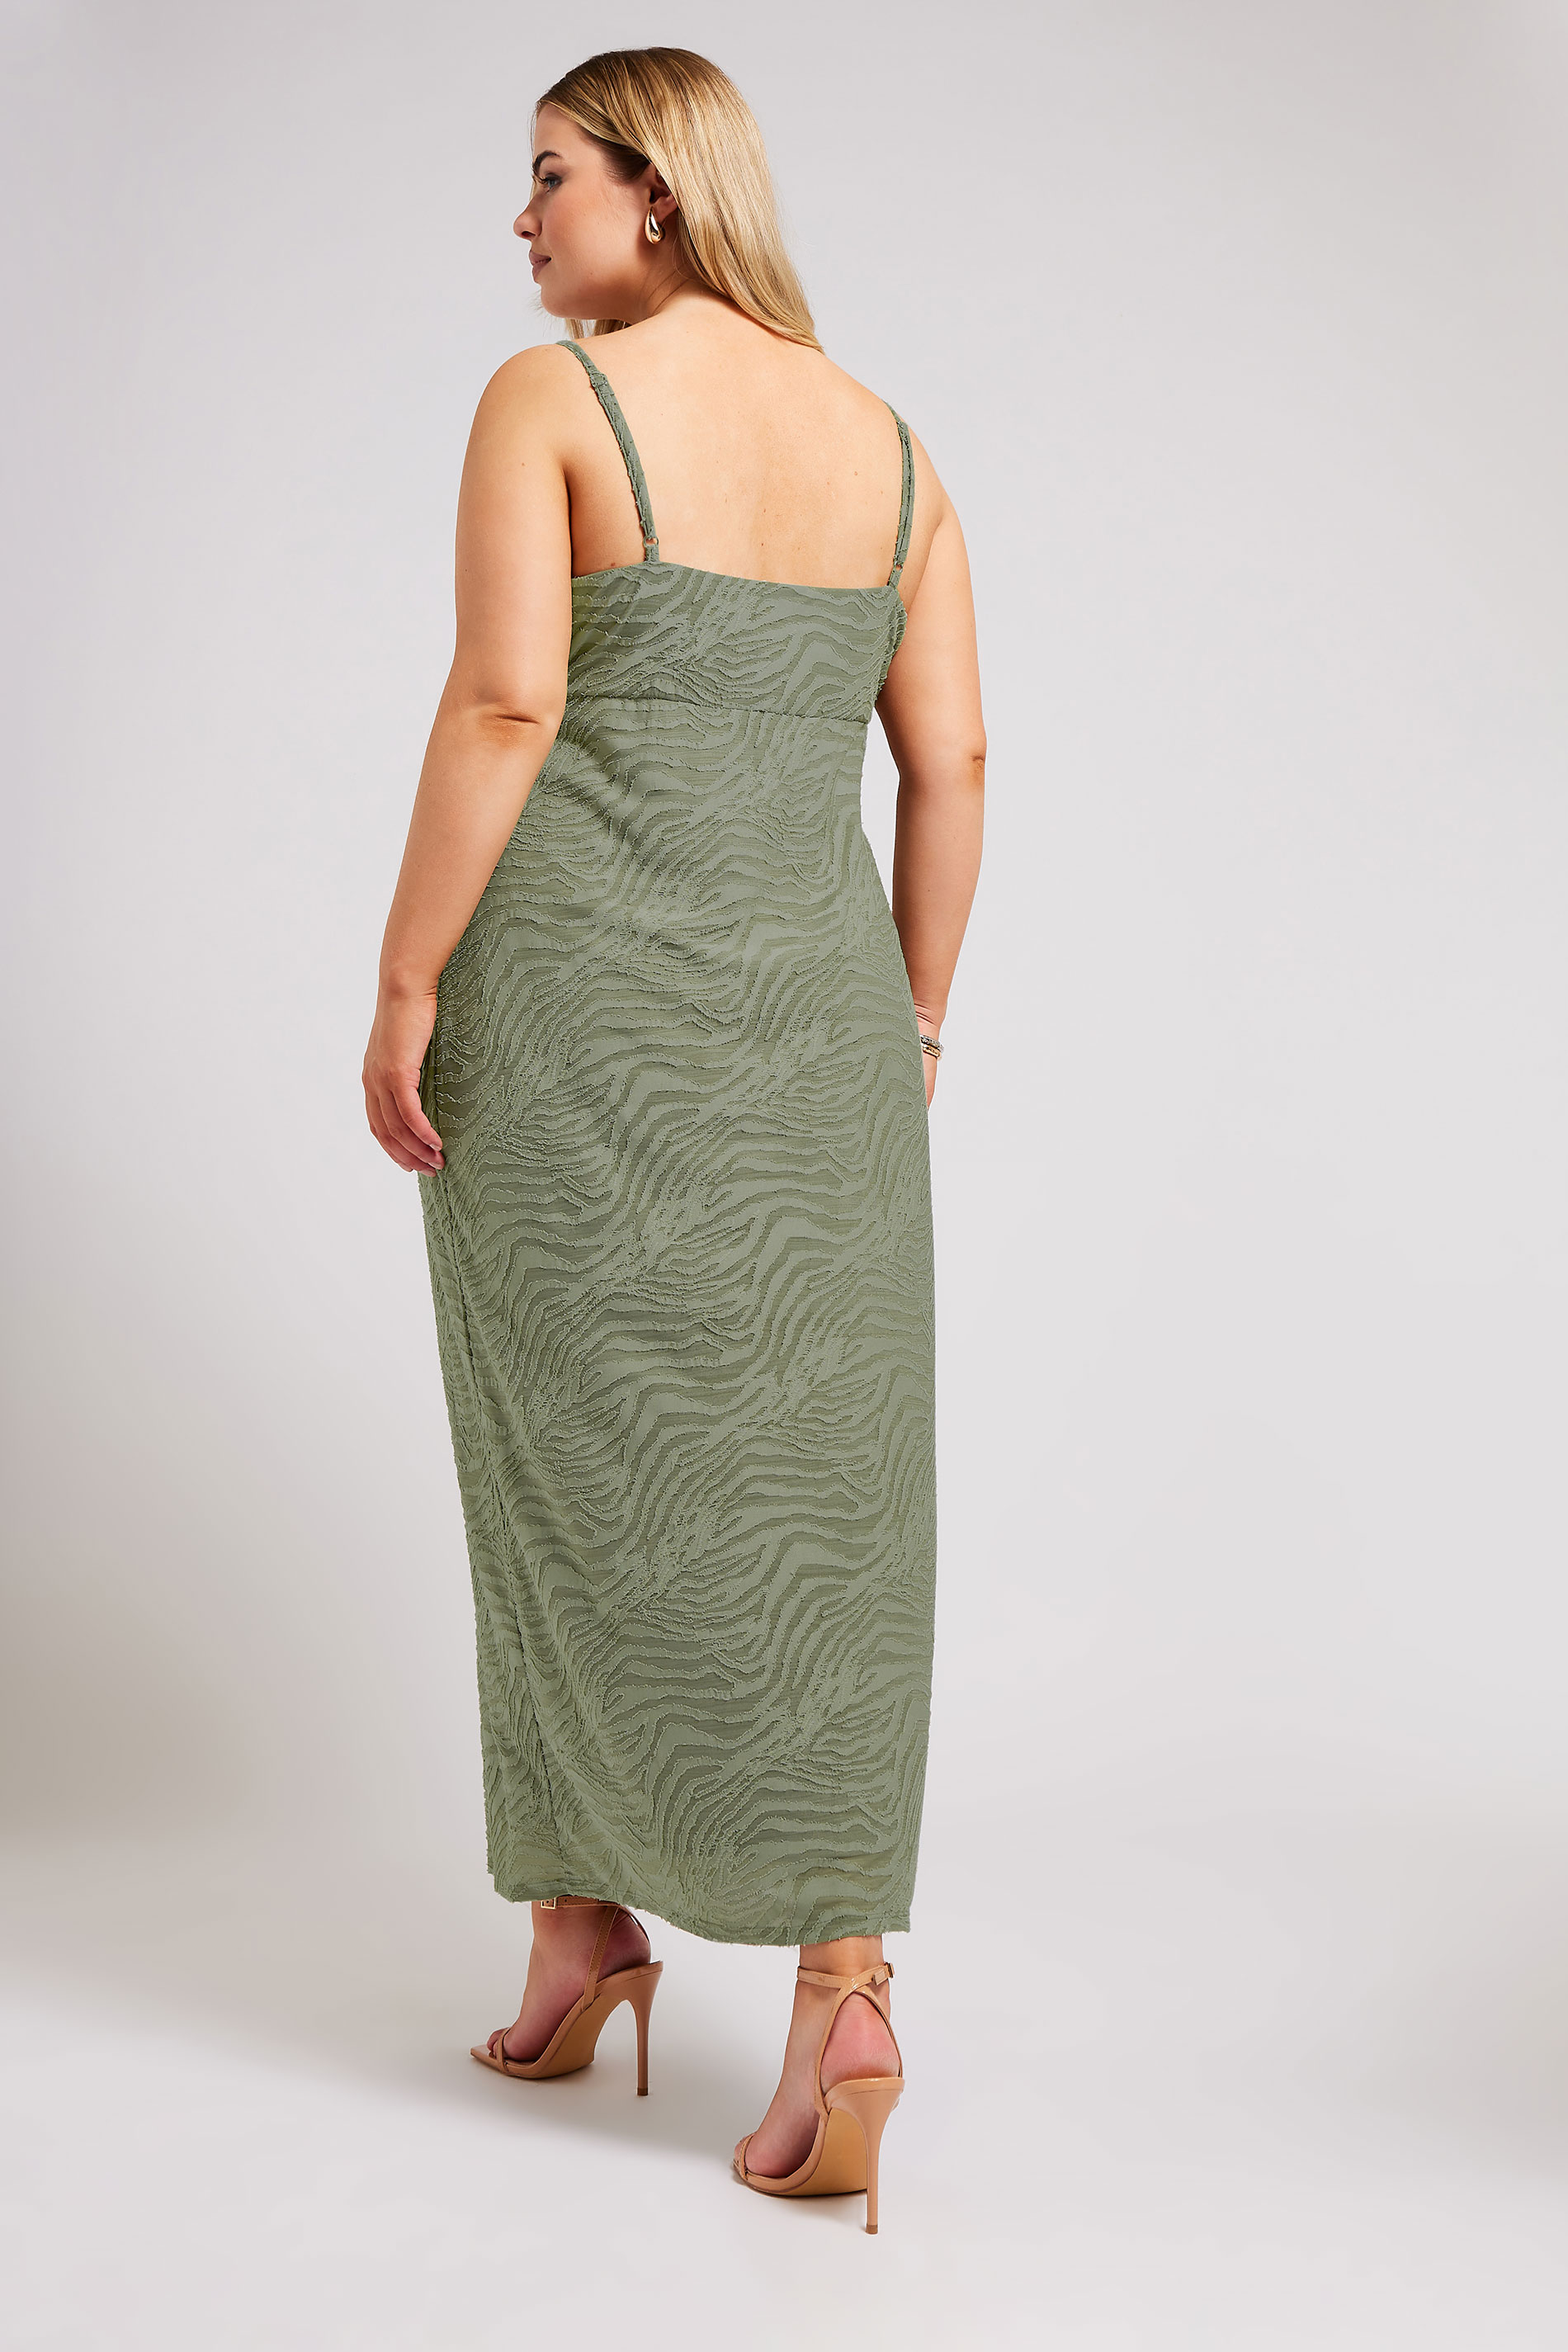 YOURS LONDON Plus Size Khaki Green Zebra Jacquard Maxi Dress | Yours Clothing 3